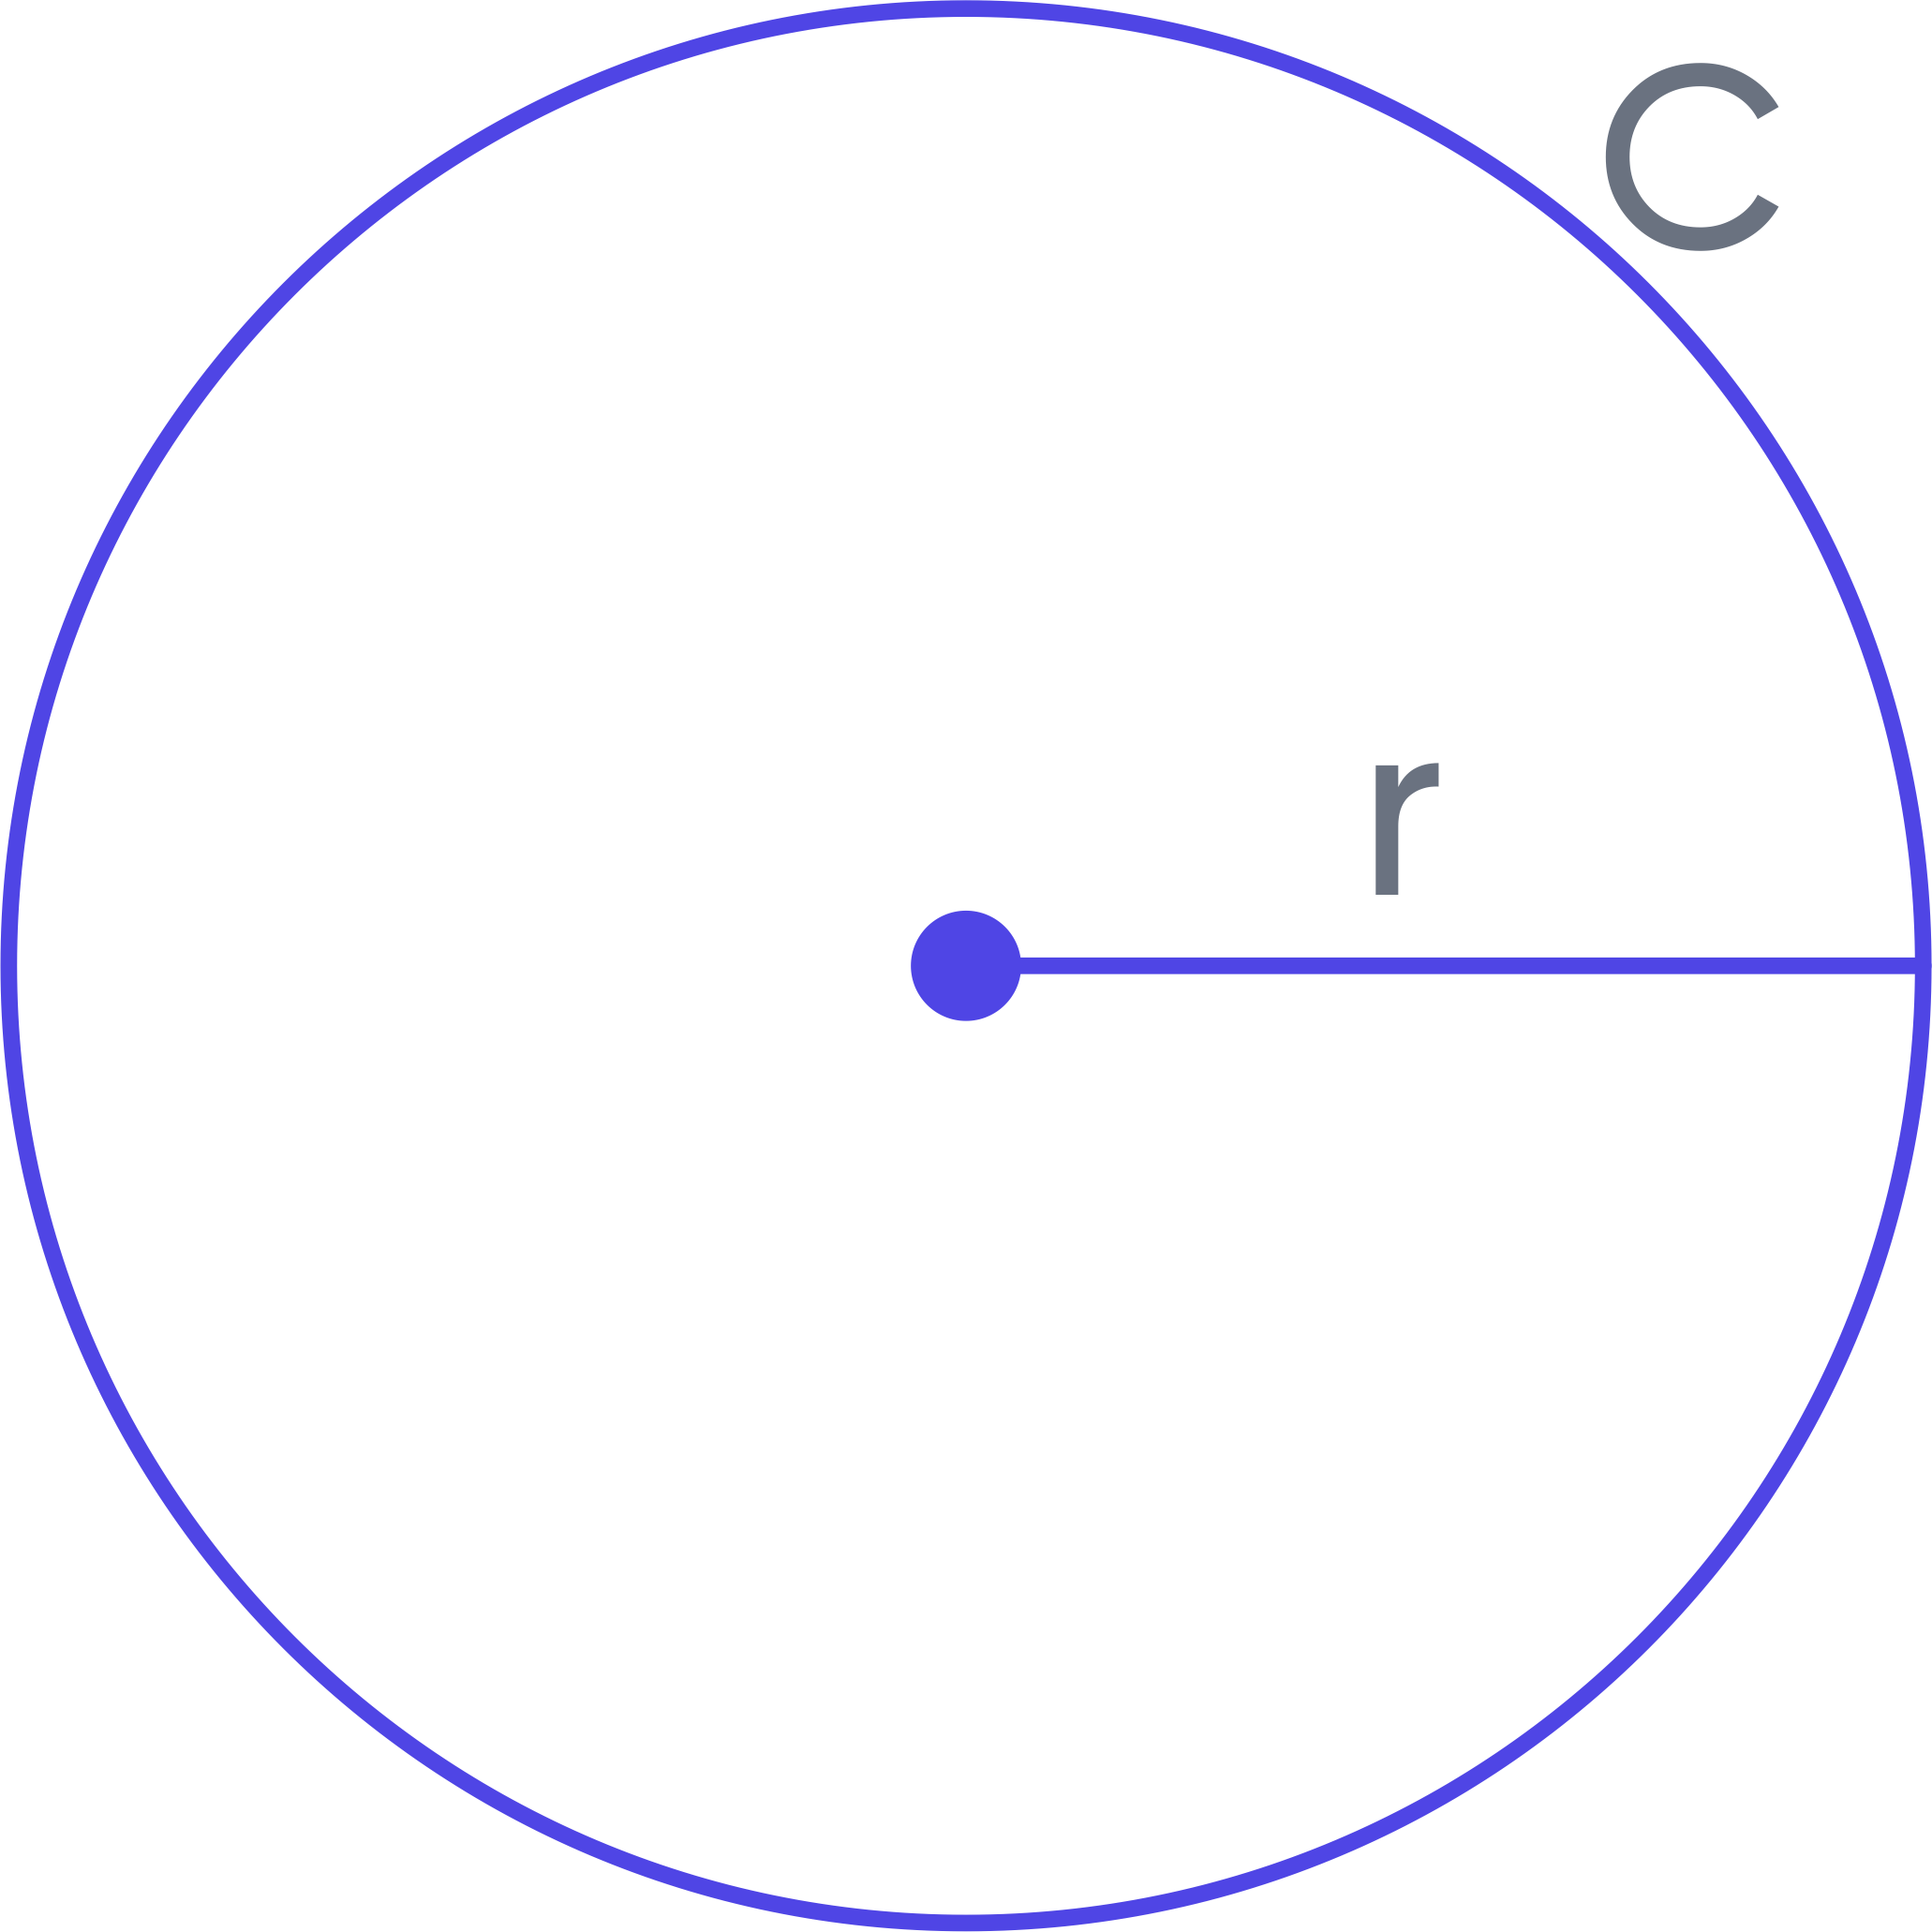 Circle circumference and radius